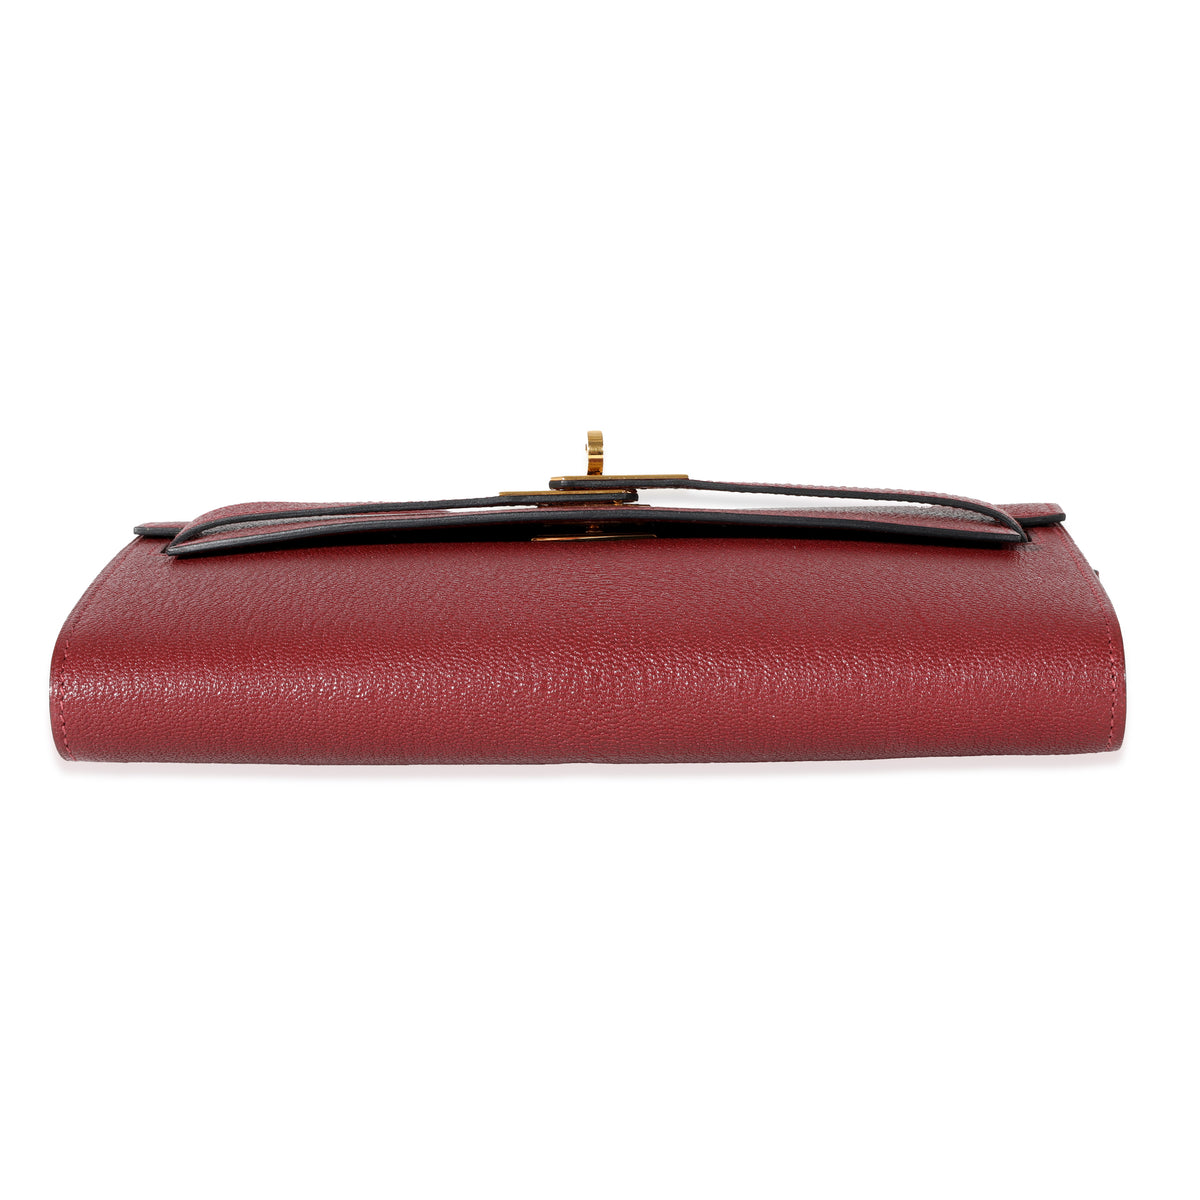 Hermes 35cm Rouge H Chevre Leather Retourne Kelly Bag with, Lot #58100